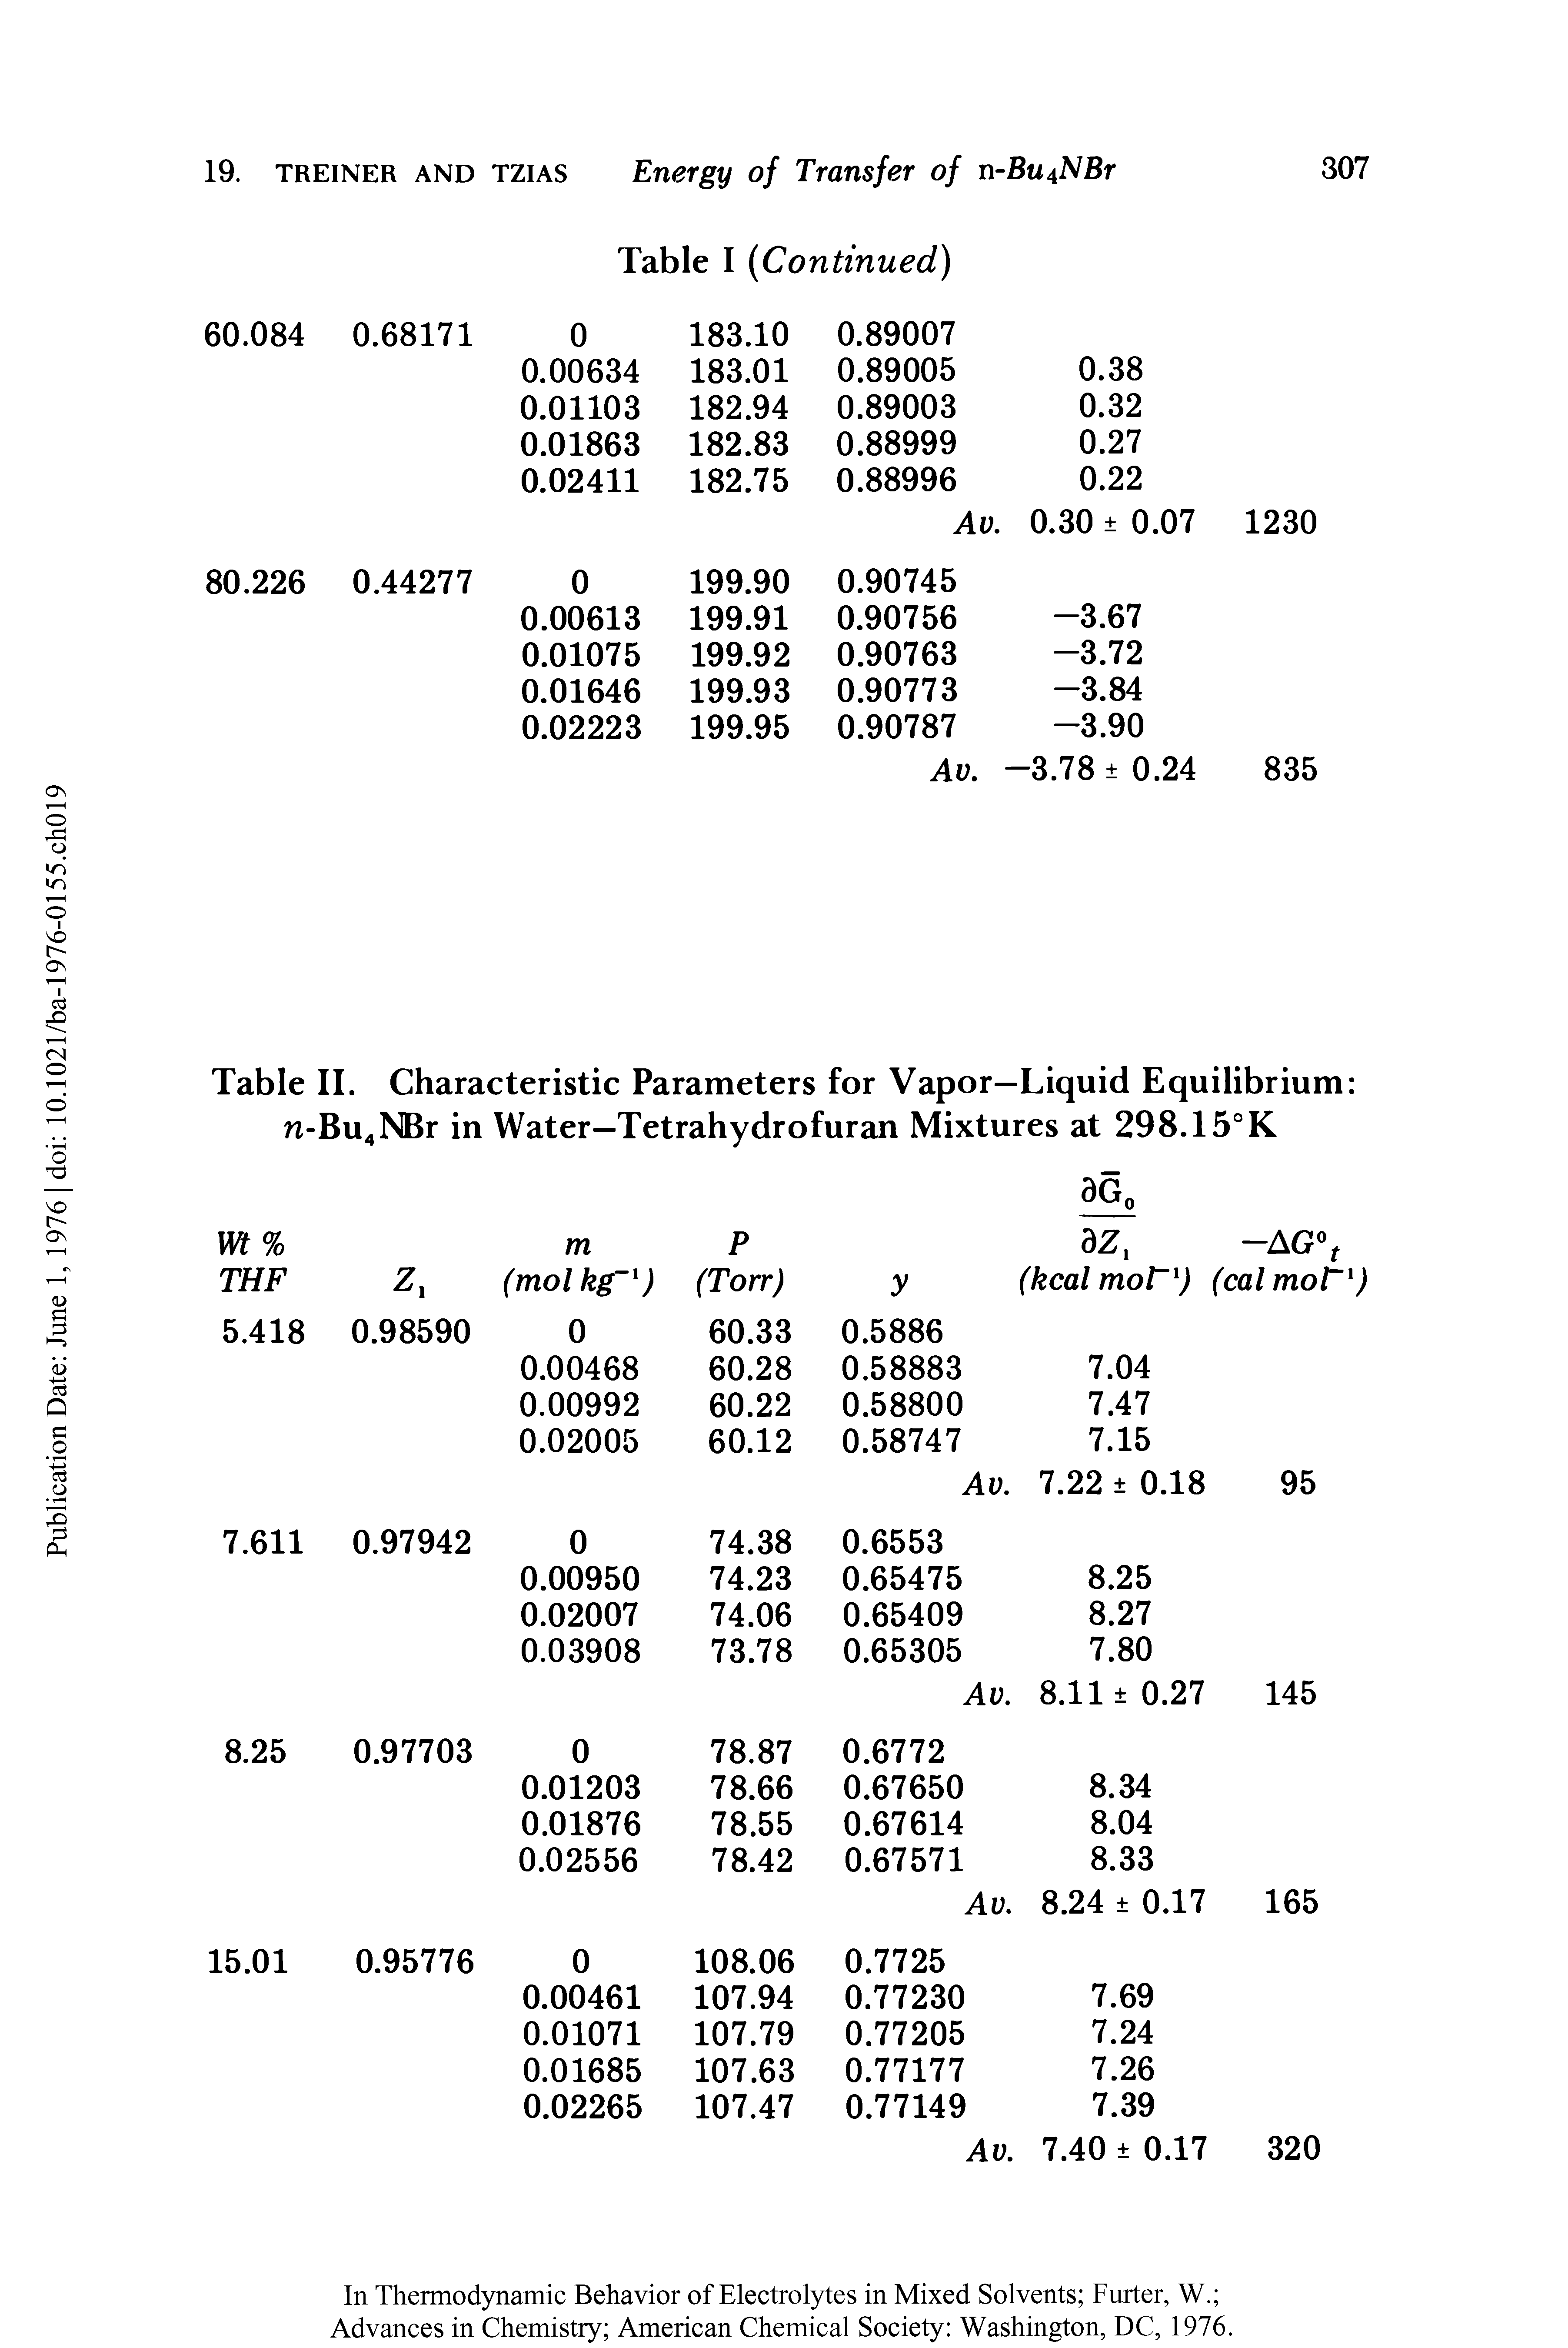 Table II. Characteristic Parameters for Vapor—Liquid Equilibrium n-Bu4NBr in Water—Tetrahydrofuran Mixtures at 298.15°K...